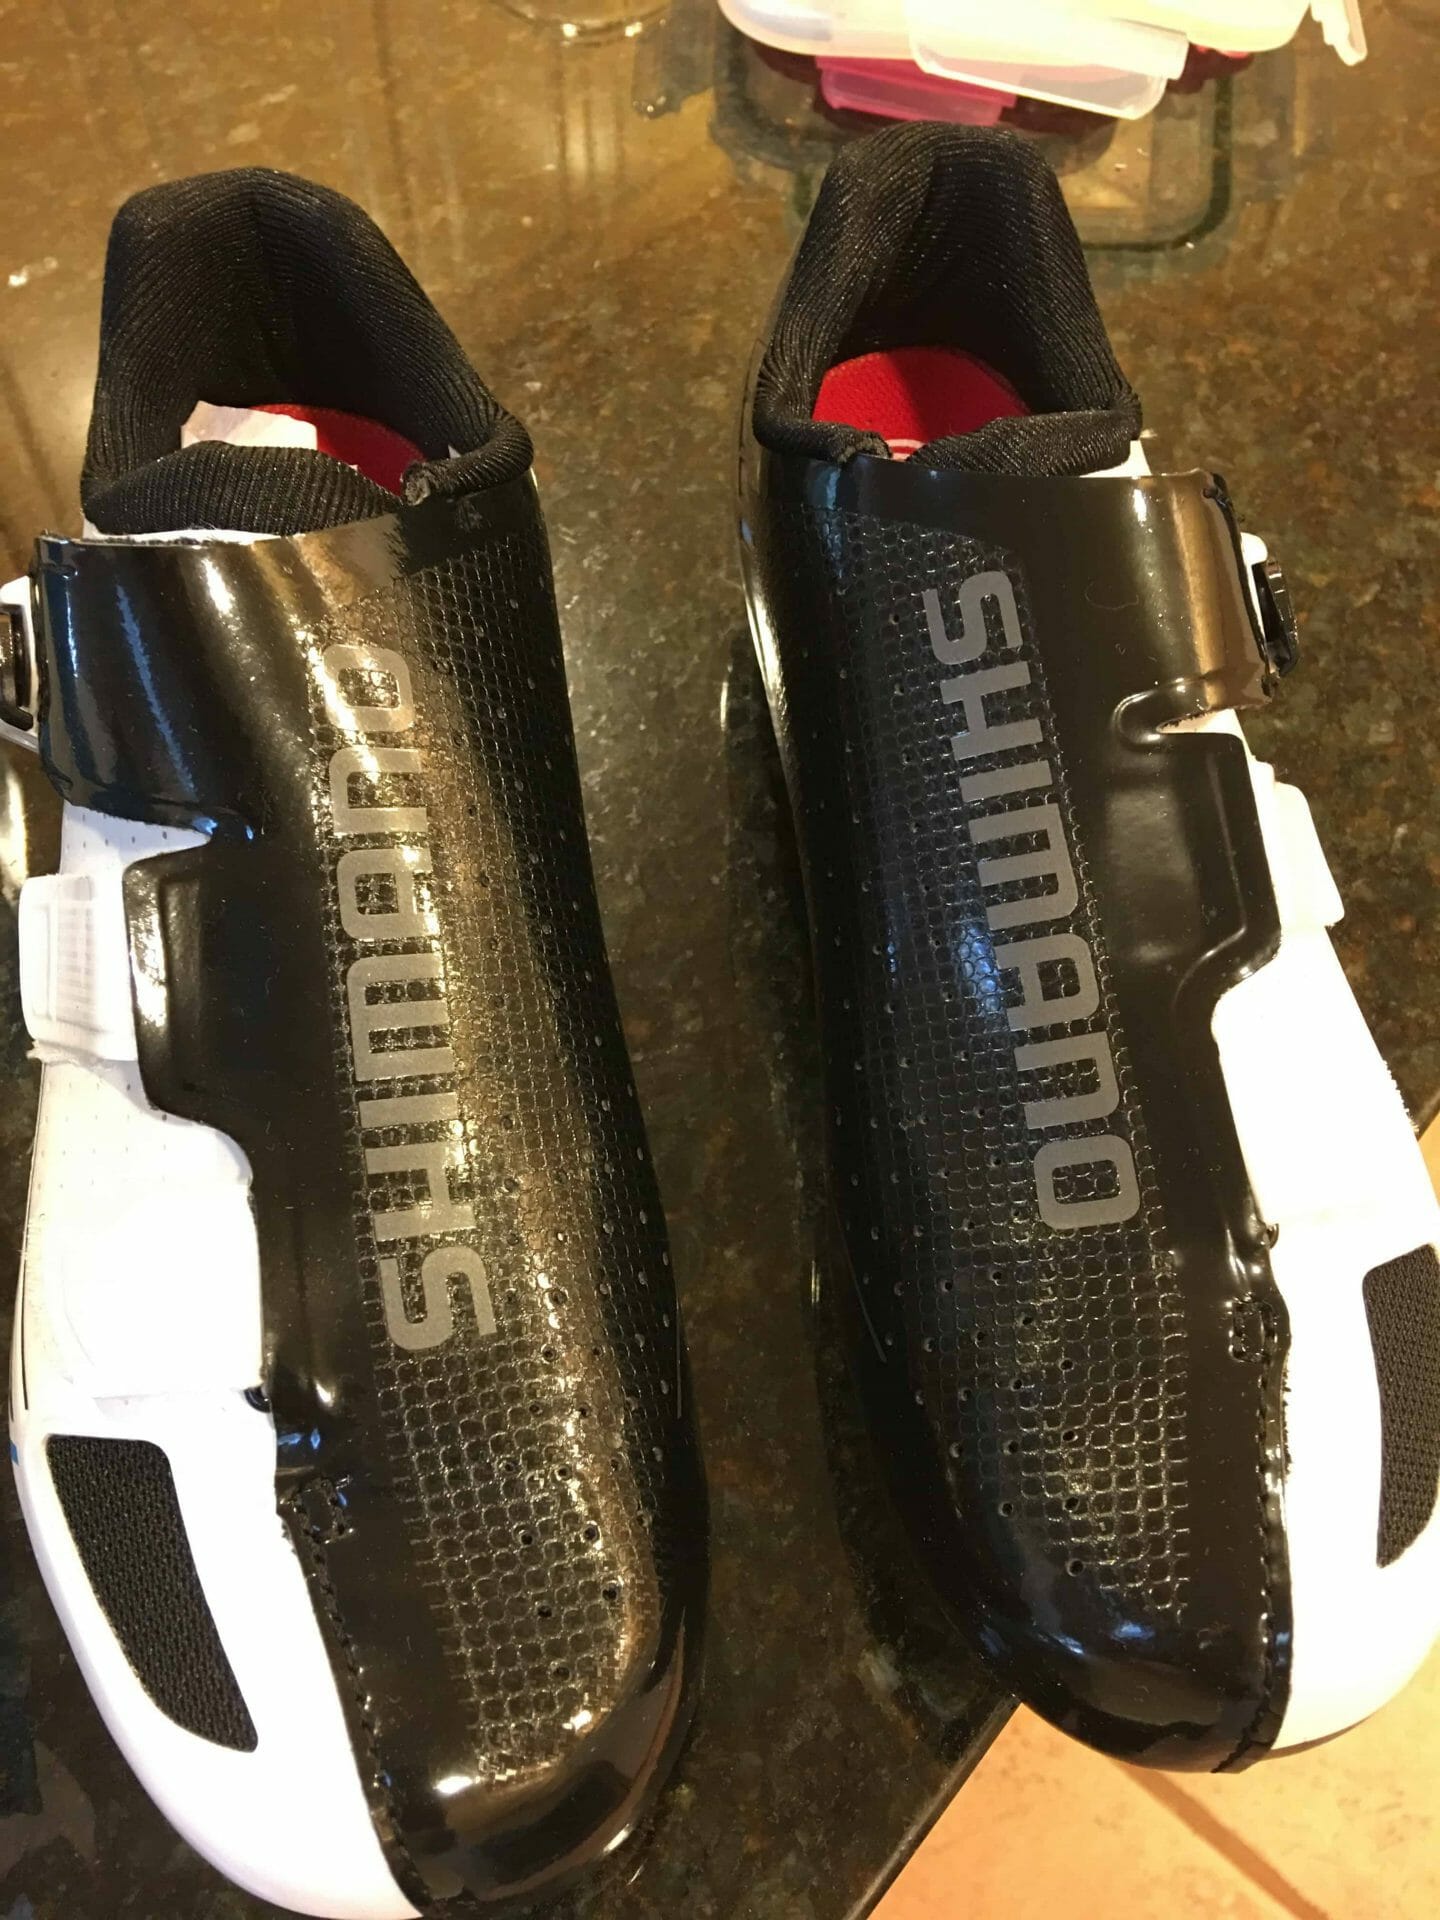 shimano offset cycling shoes